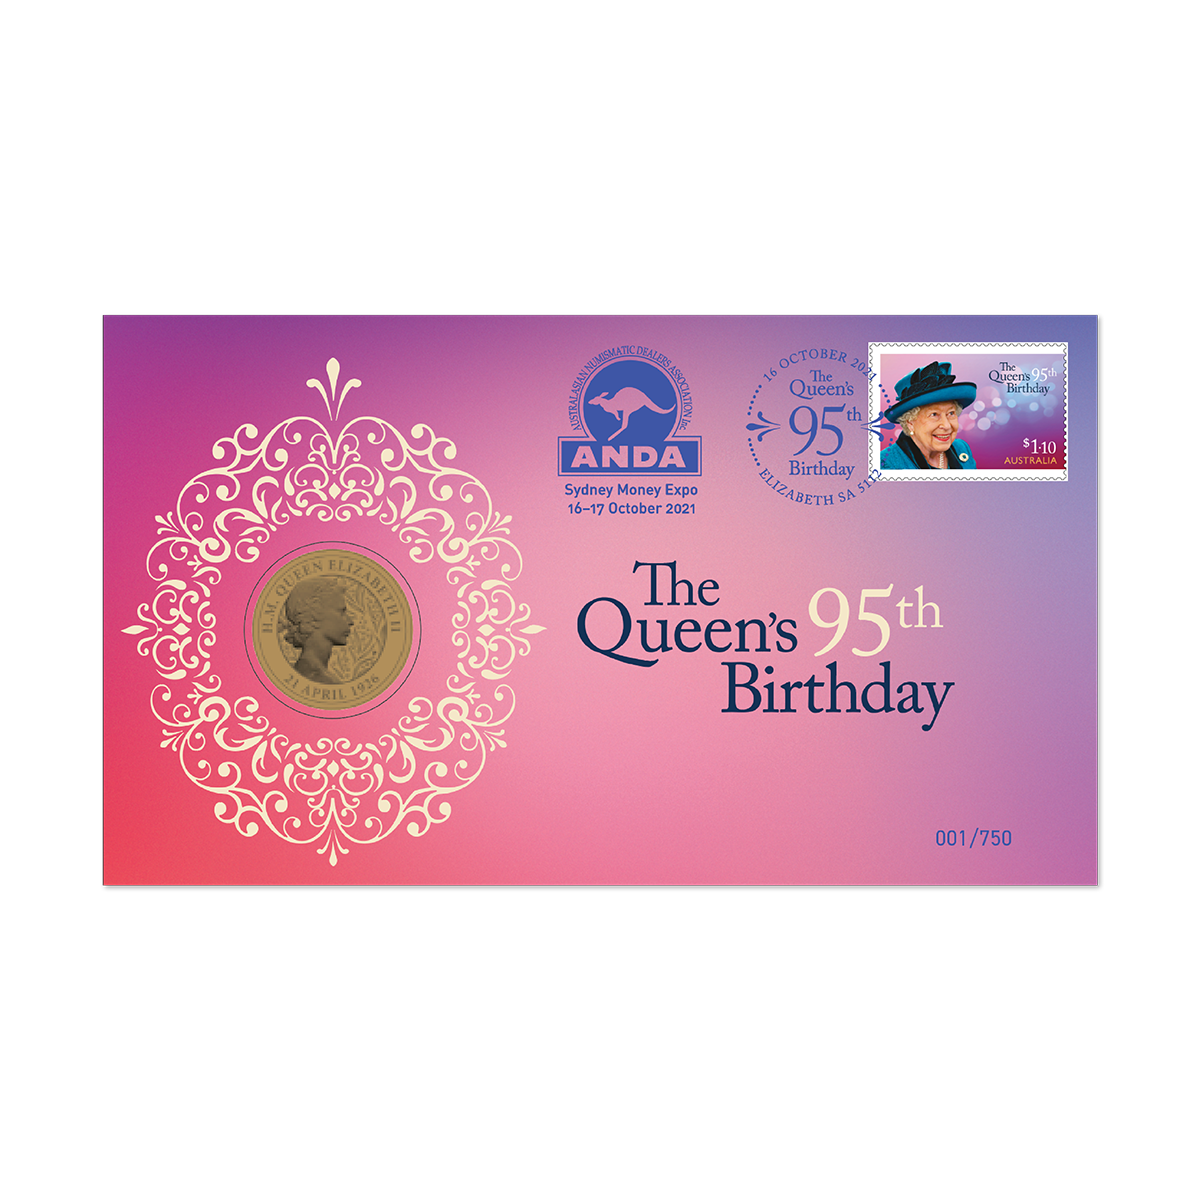 2021 The Queen's 95th Birthday PNC - Sydney ANDA Money Expo